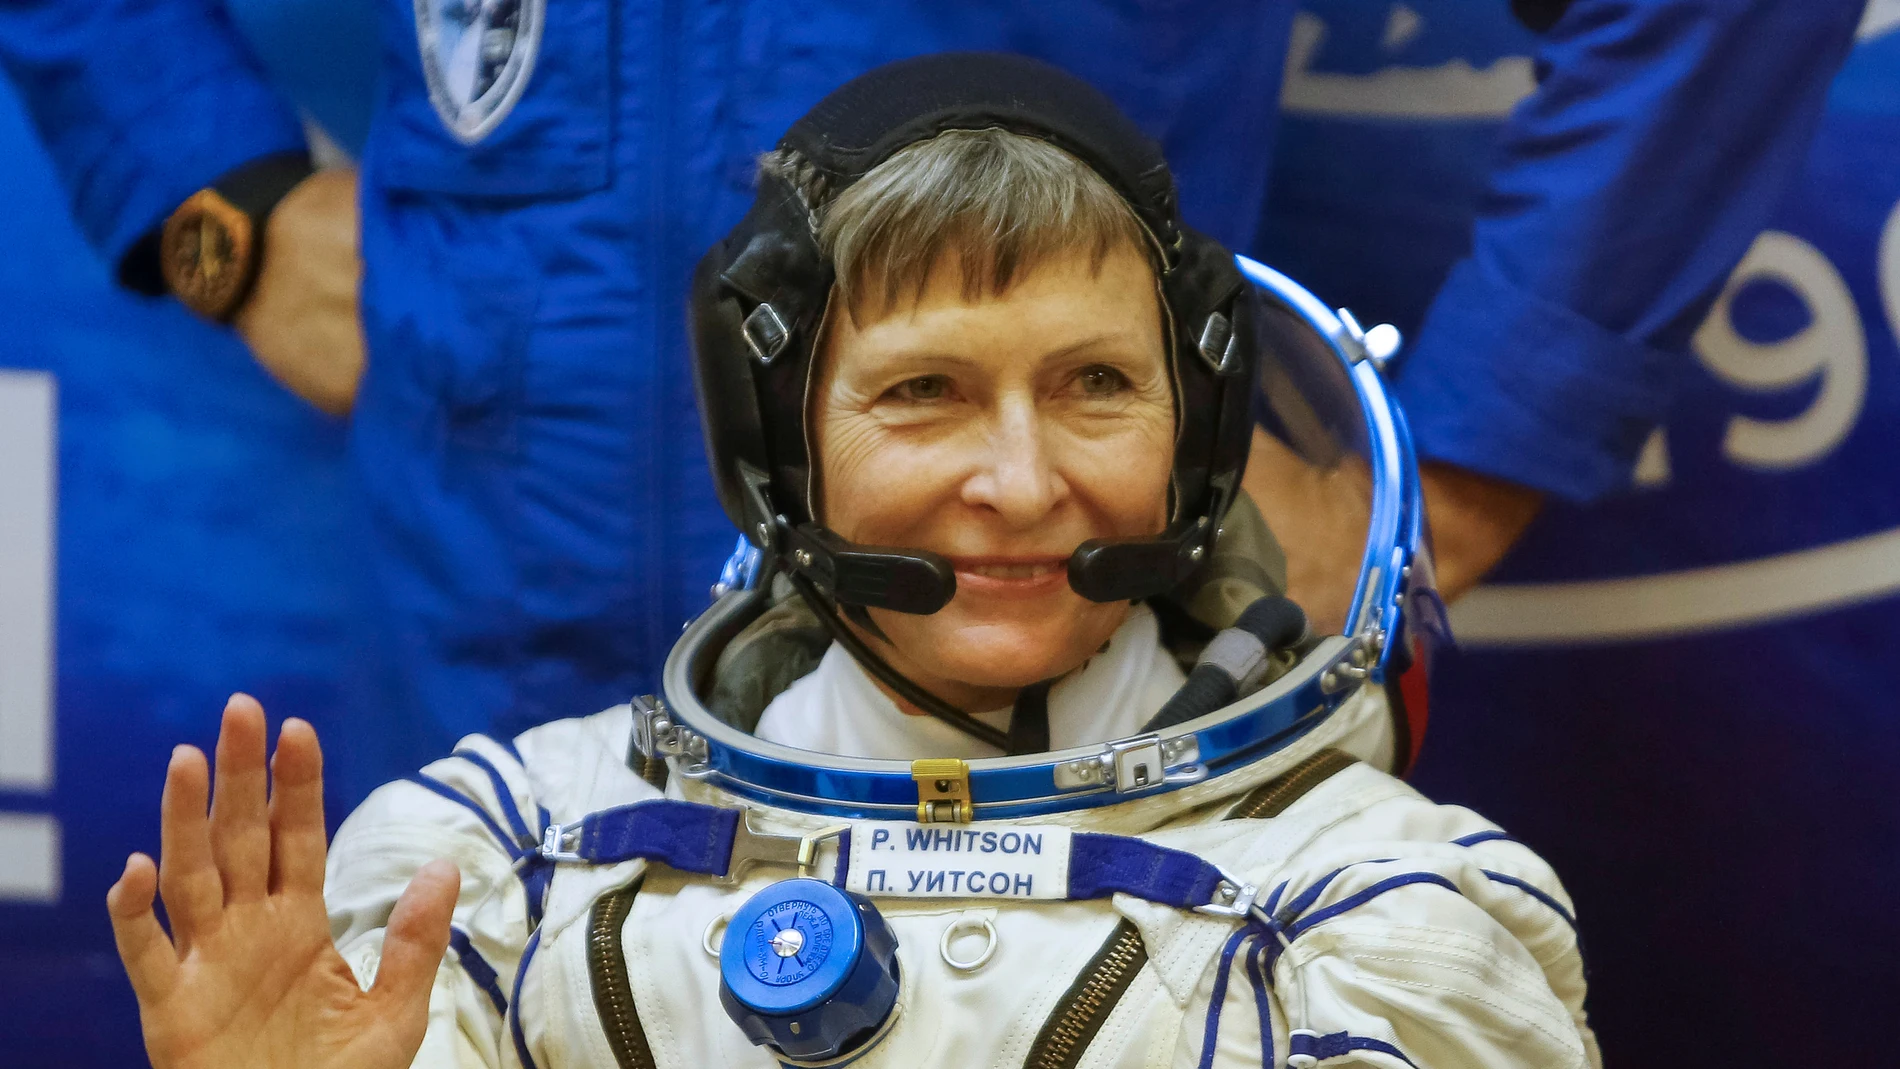 La astronauta Peggy Whitson